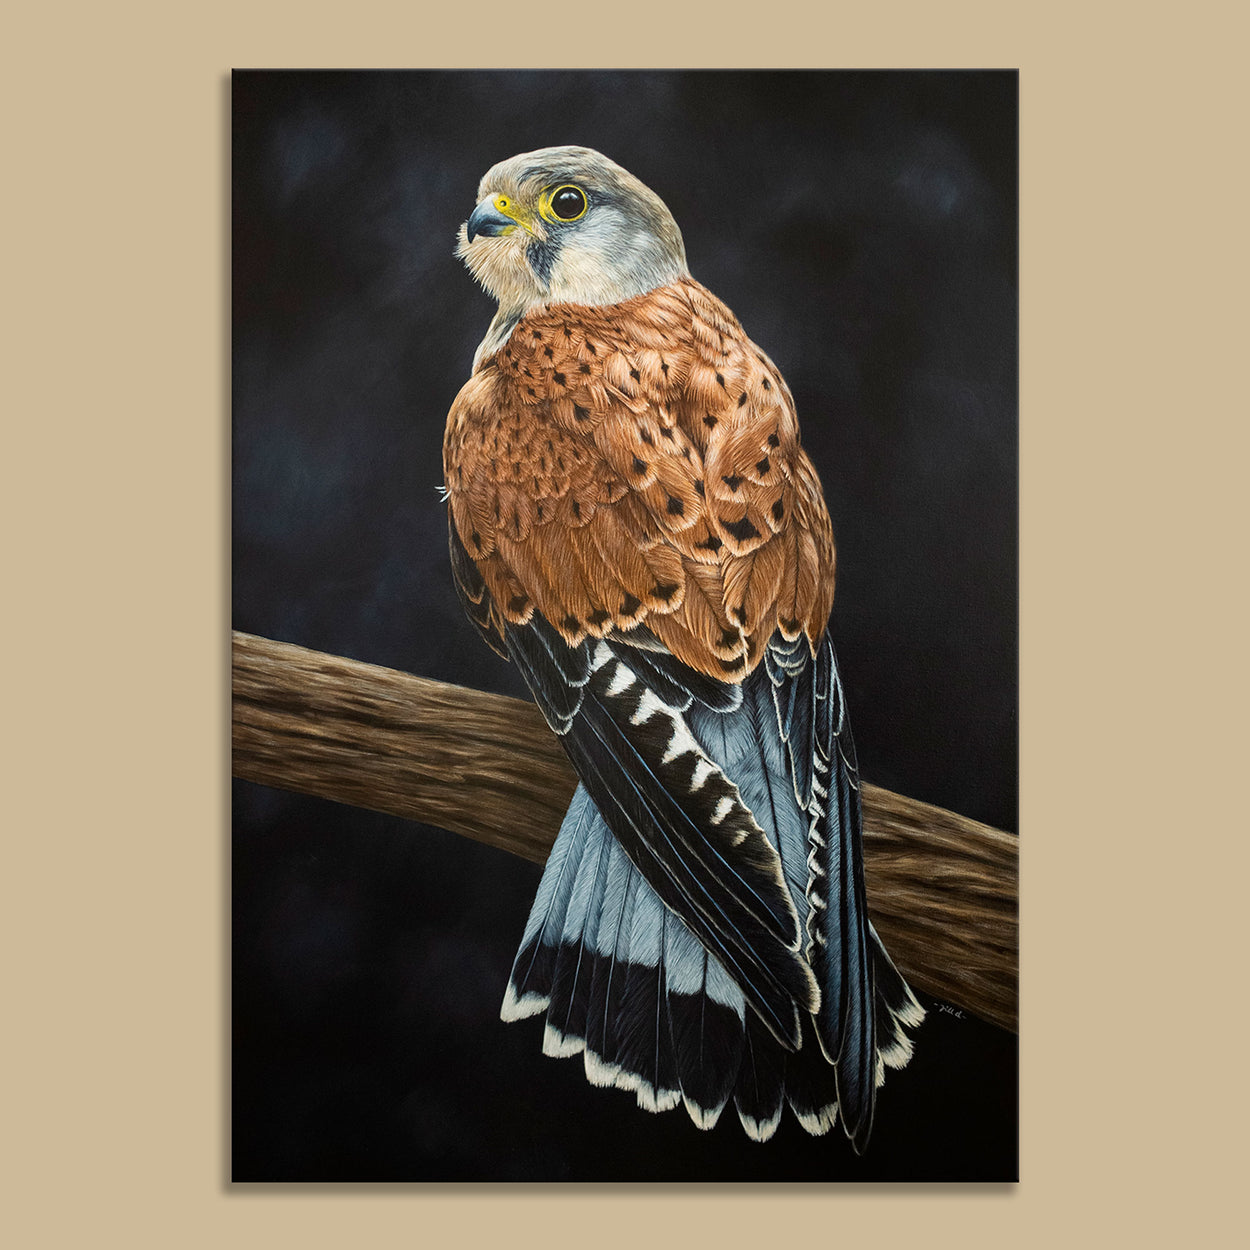 Male Kestrel Painting on Canvas - Bird Art by Jill Dimond